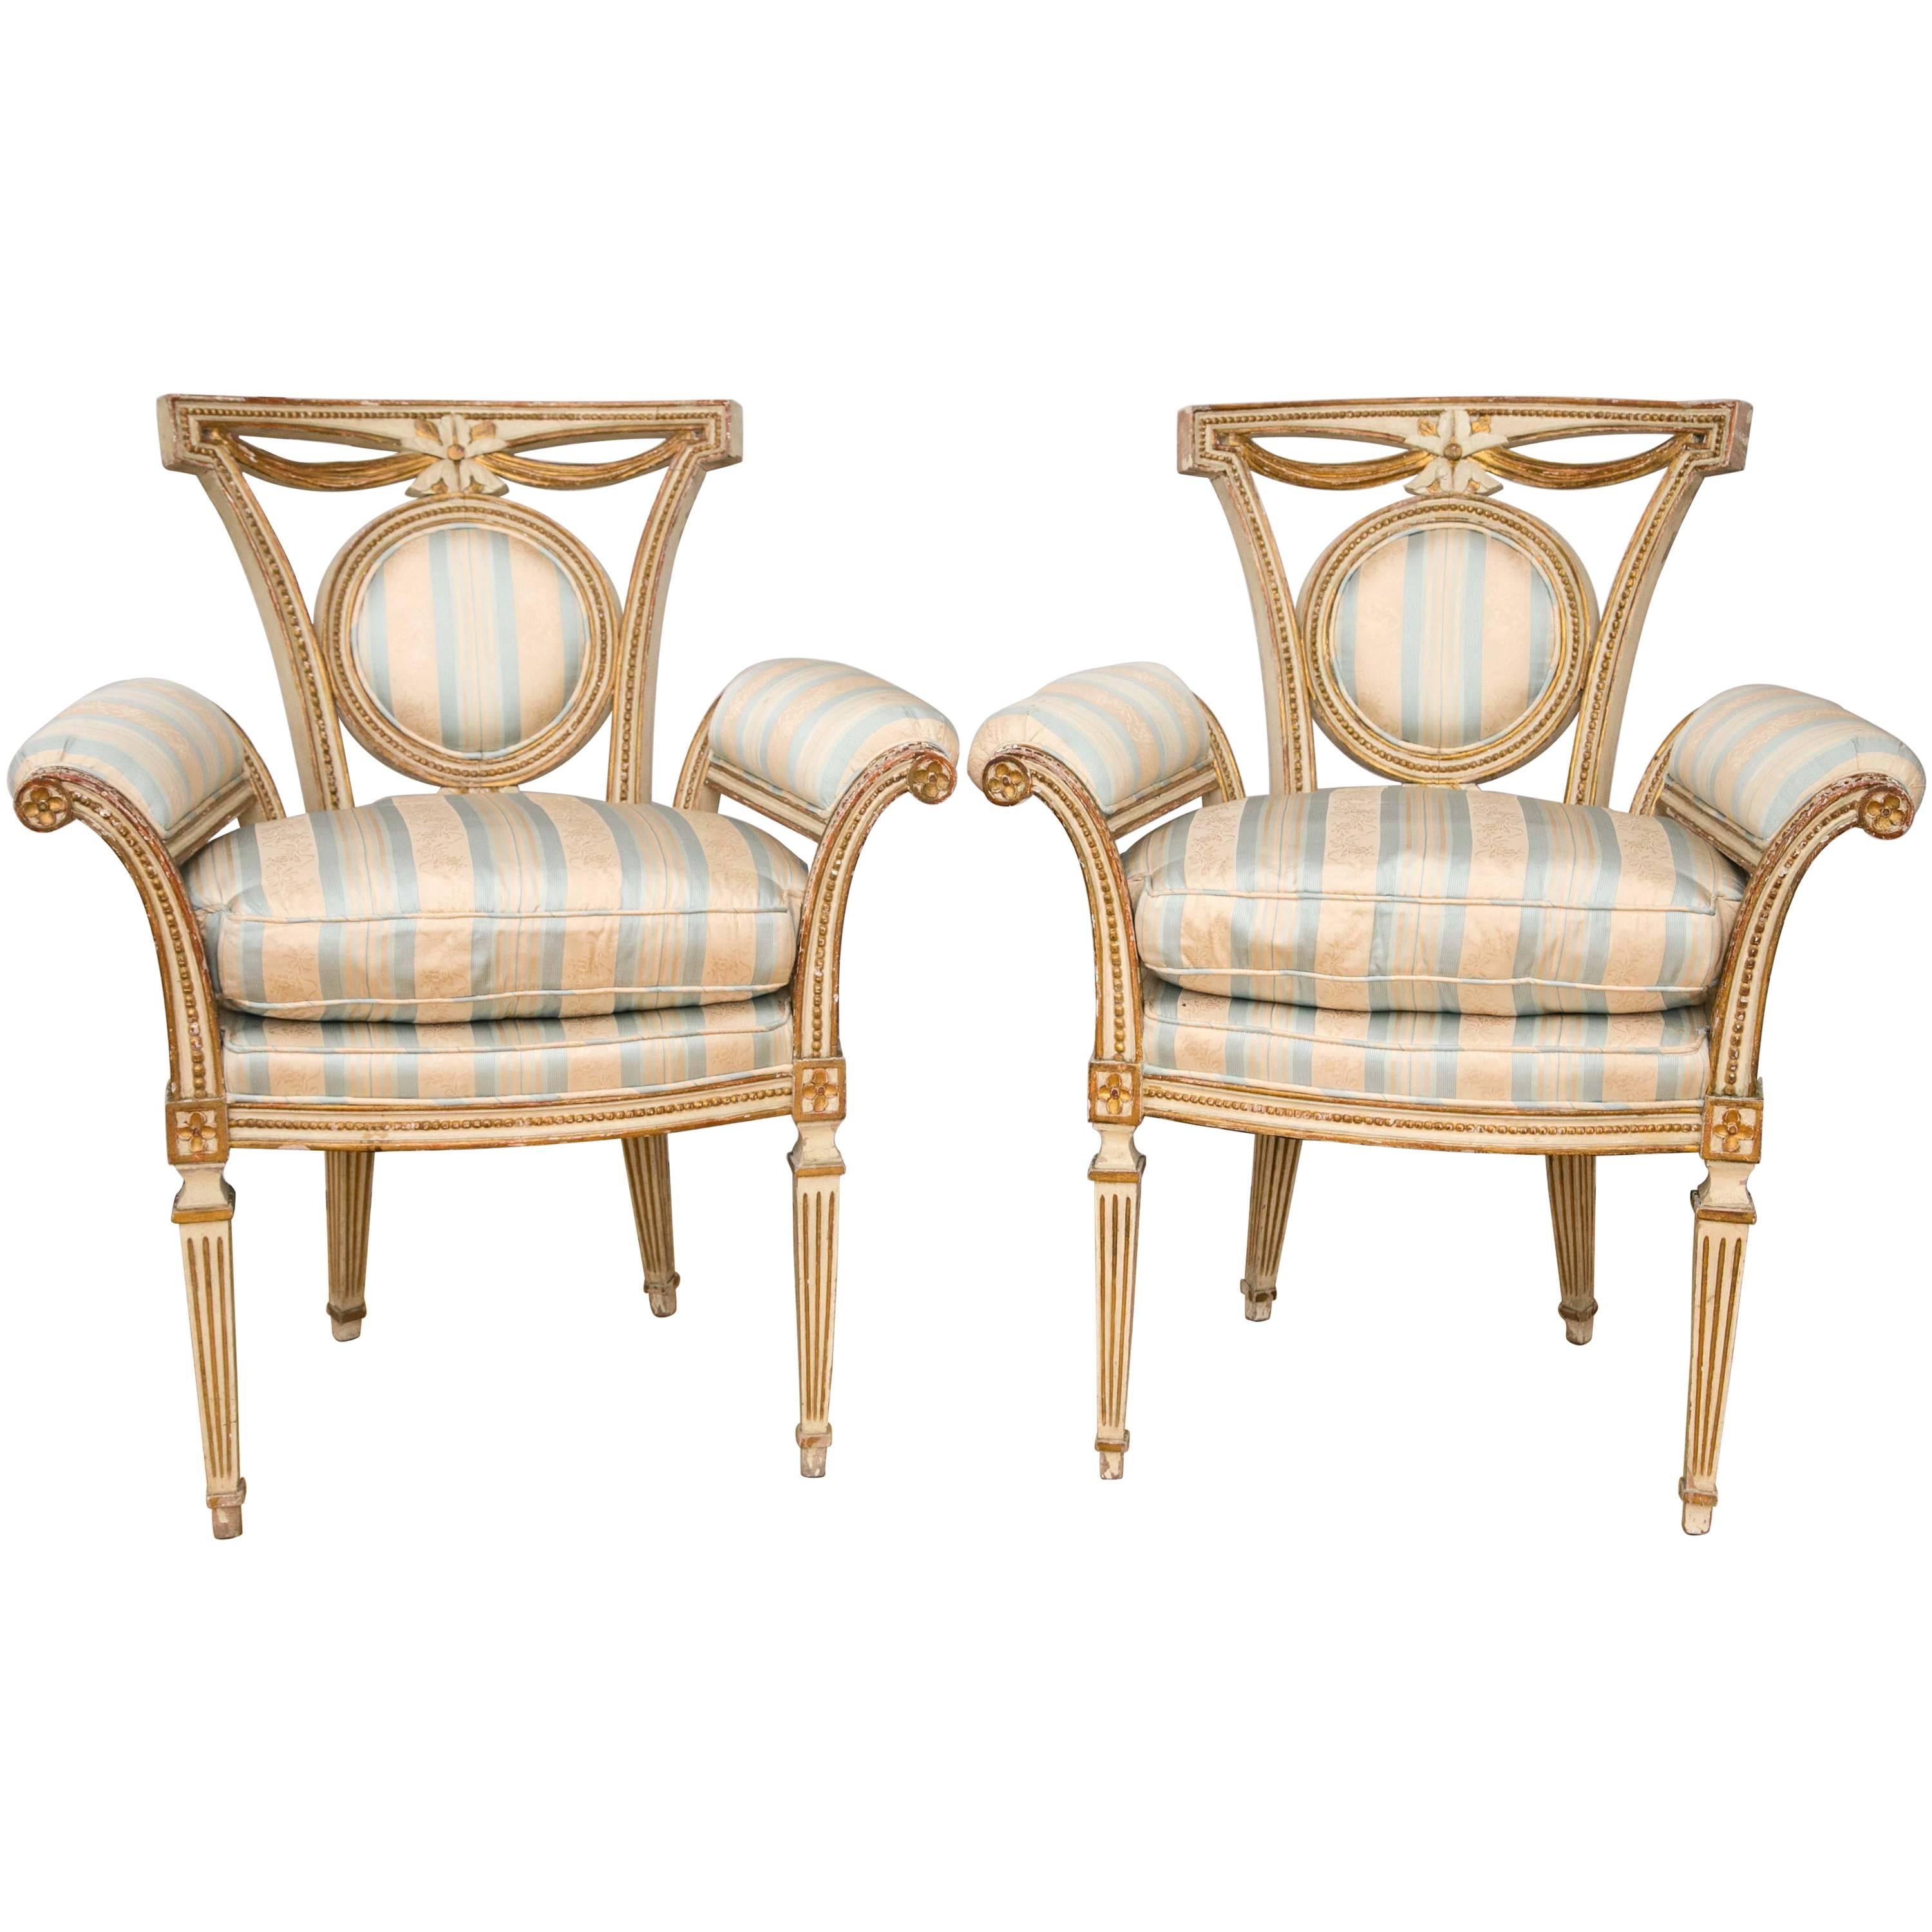 Pair of Louis XVI Style Parcel-Gilt Upholstered Fauteuils